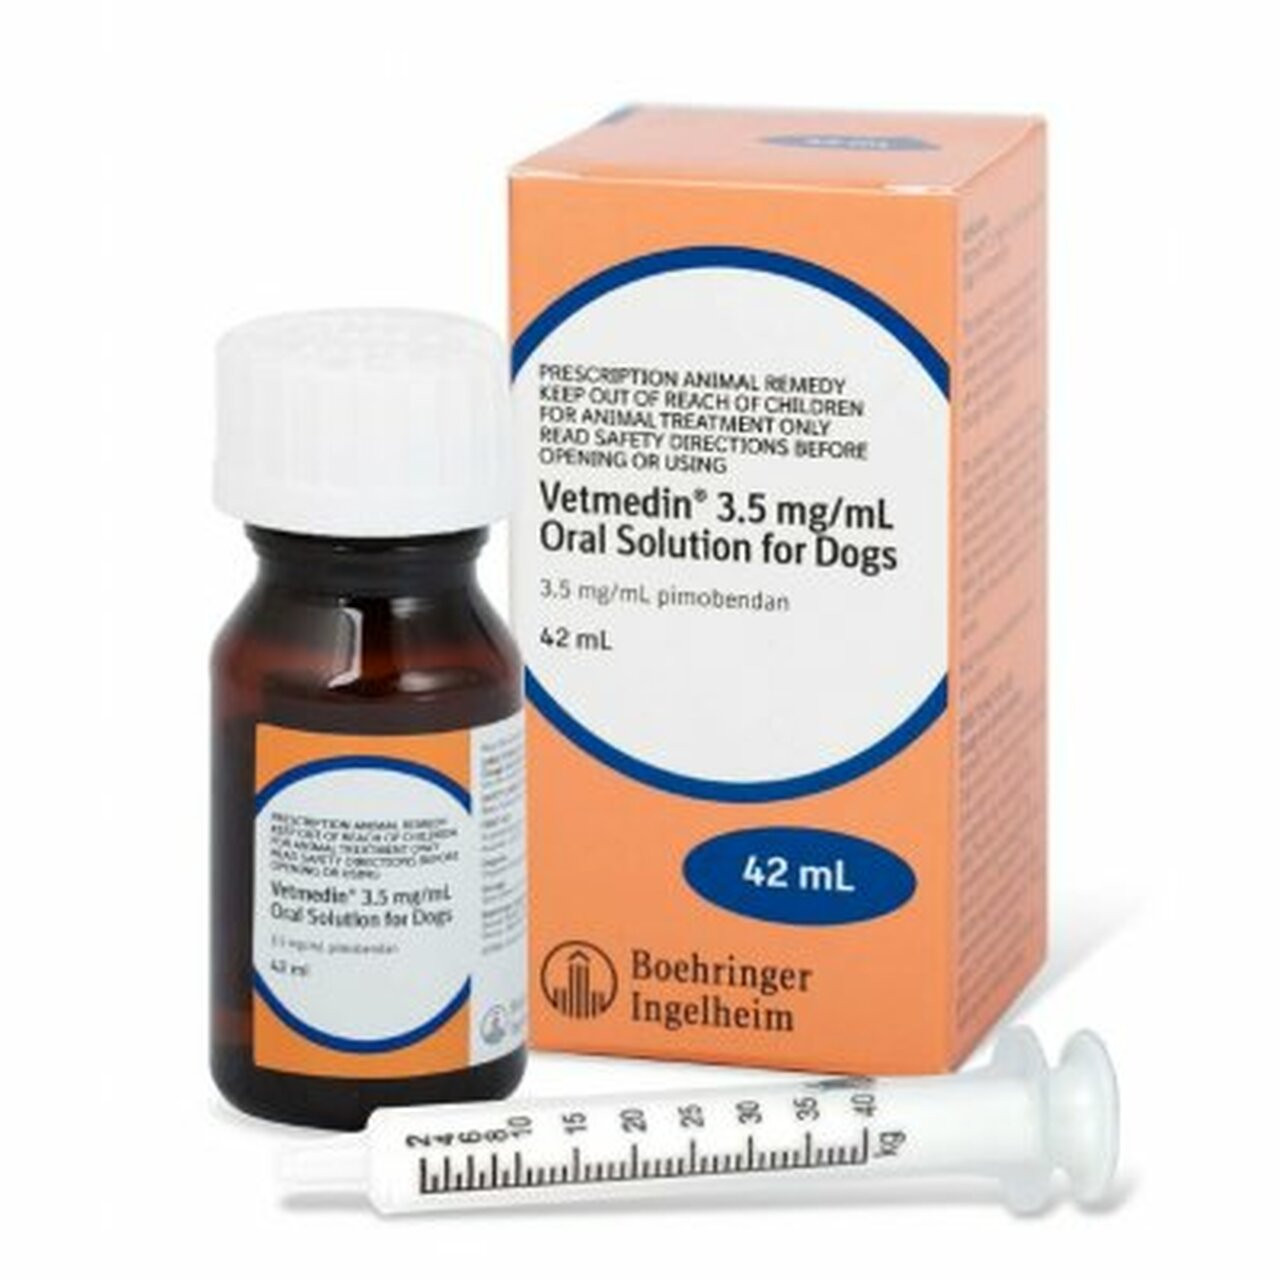 buy-vetmedin-42ml-liquid-at-pet-care-pharmacy-free-shipping-over-99